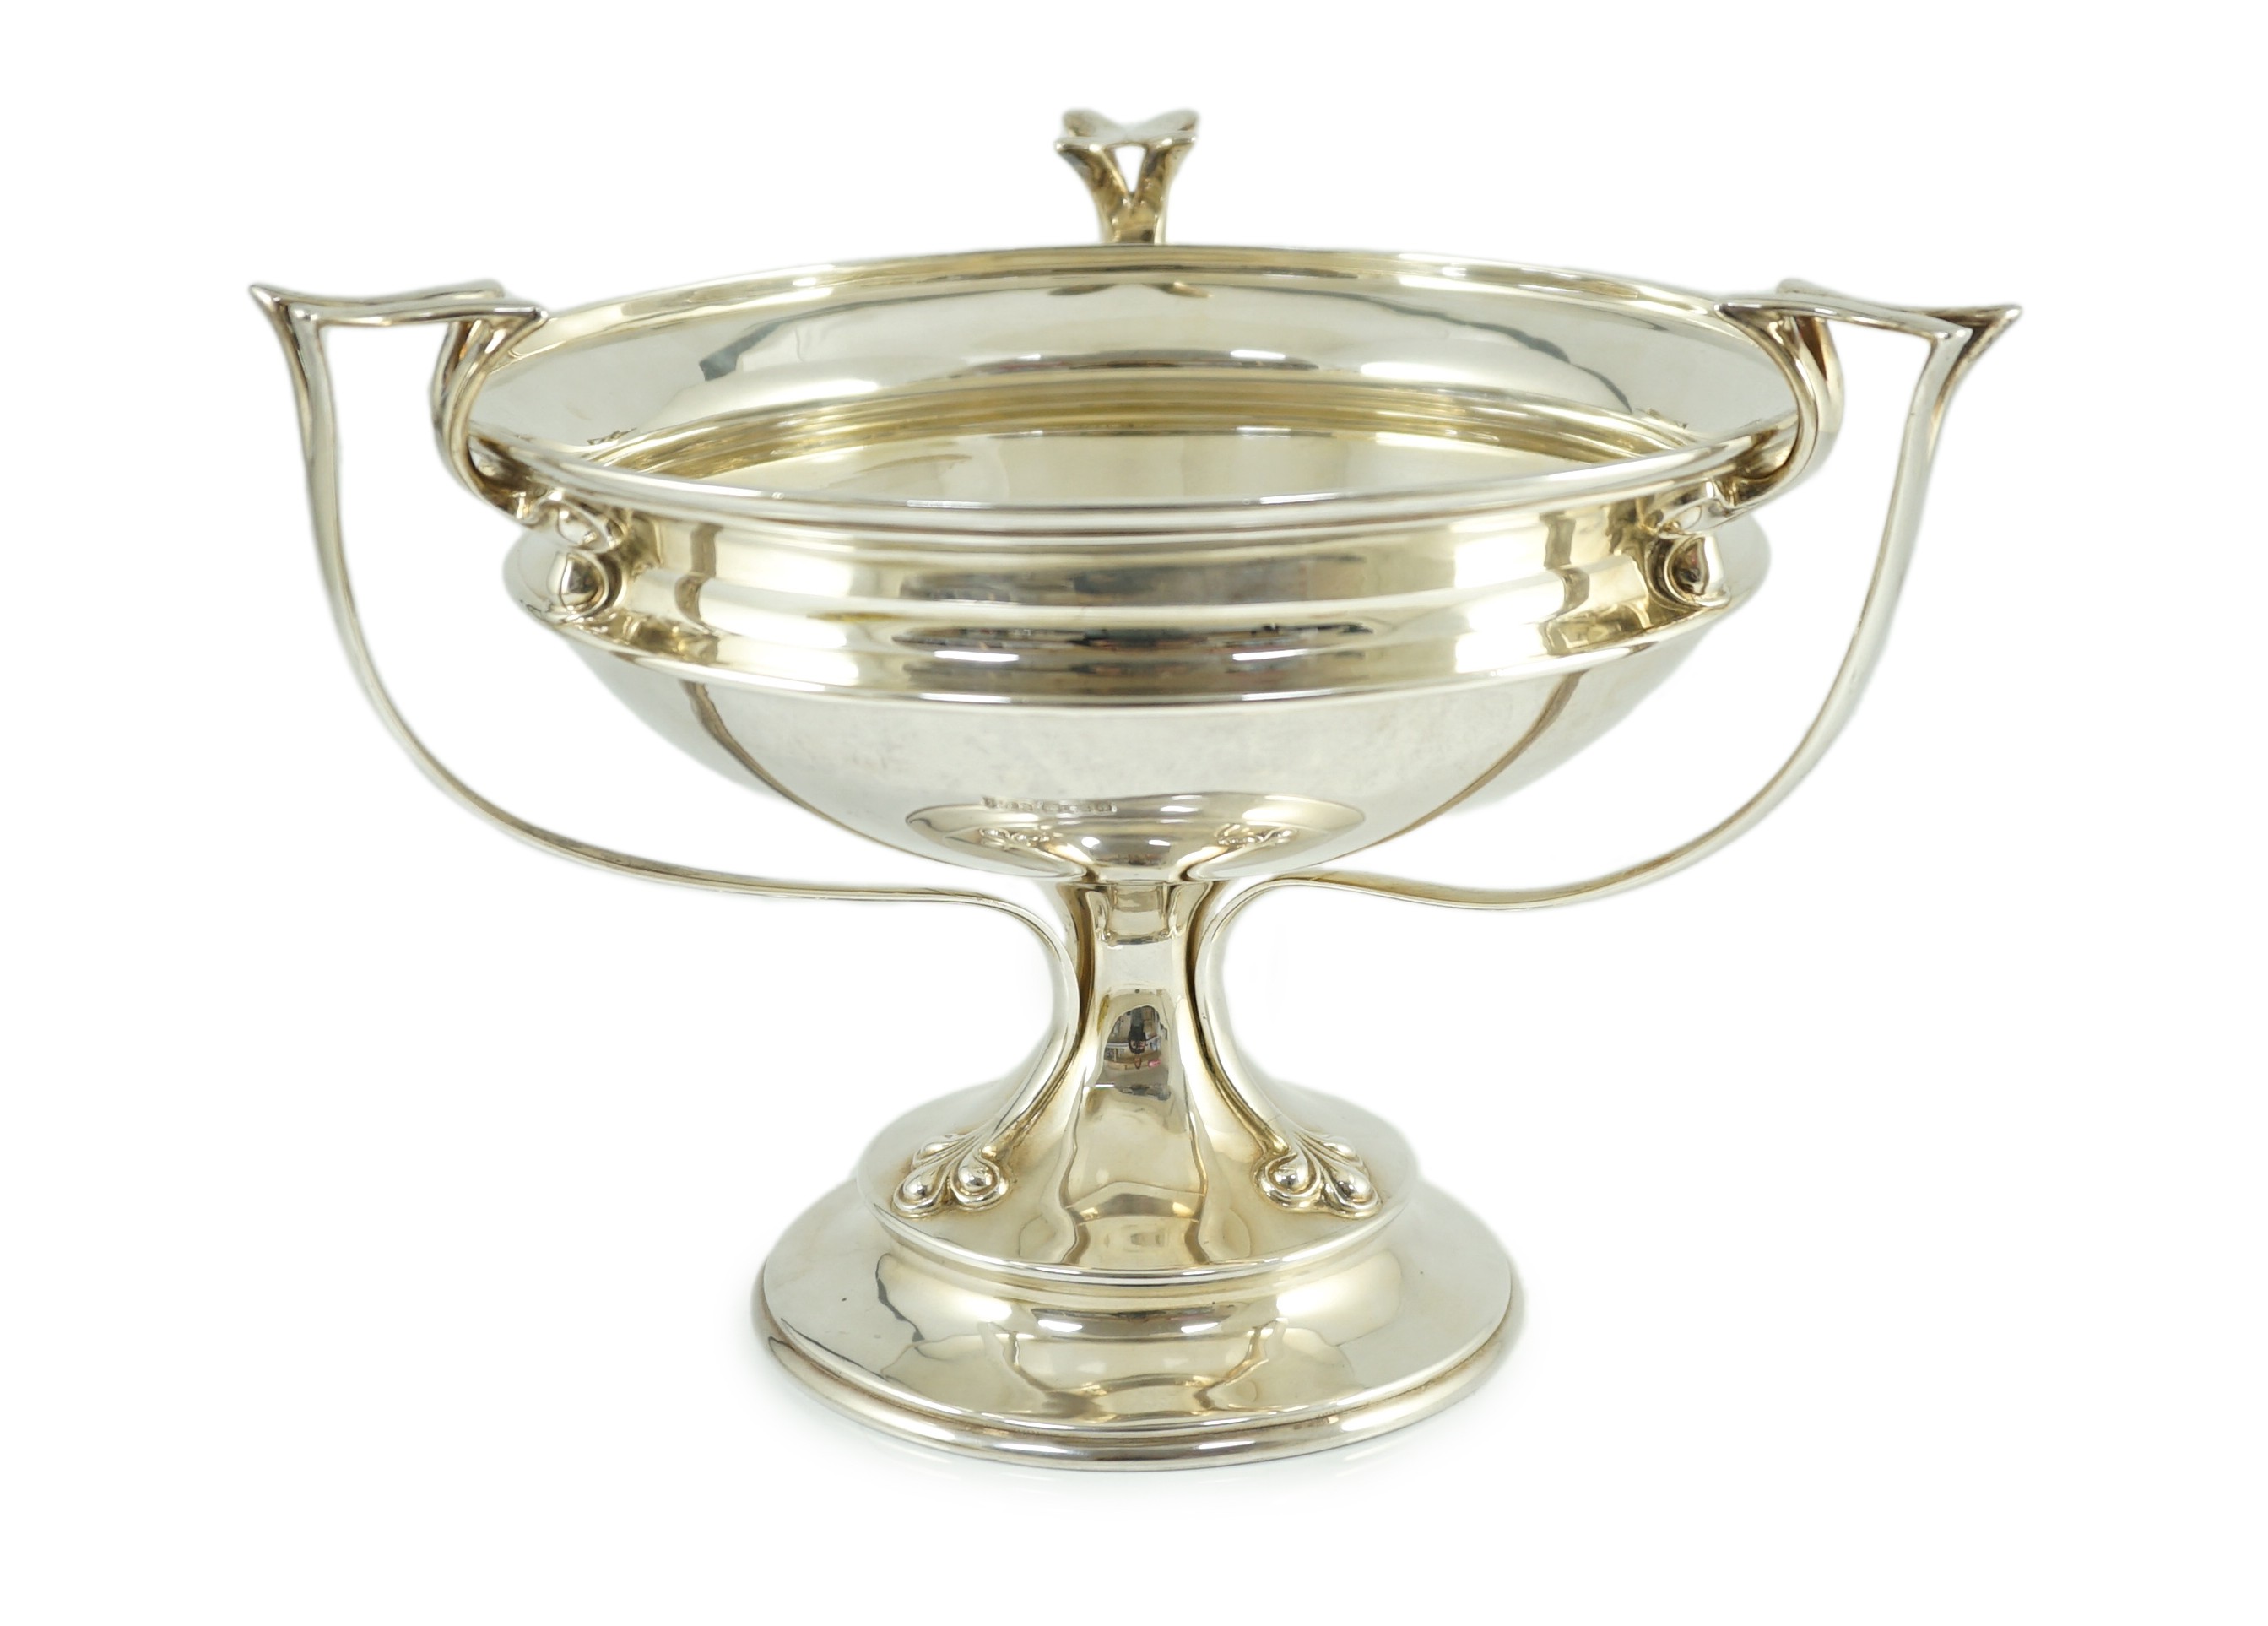 An Edwardian Art Nouveau silver tri-handled pedestal fruit bowl, by Joseph Rodgers & Sons                                                                                                                                   